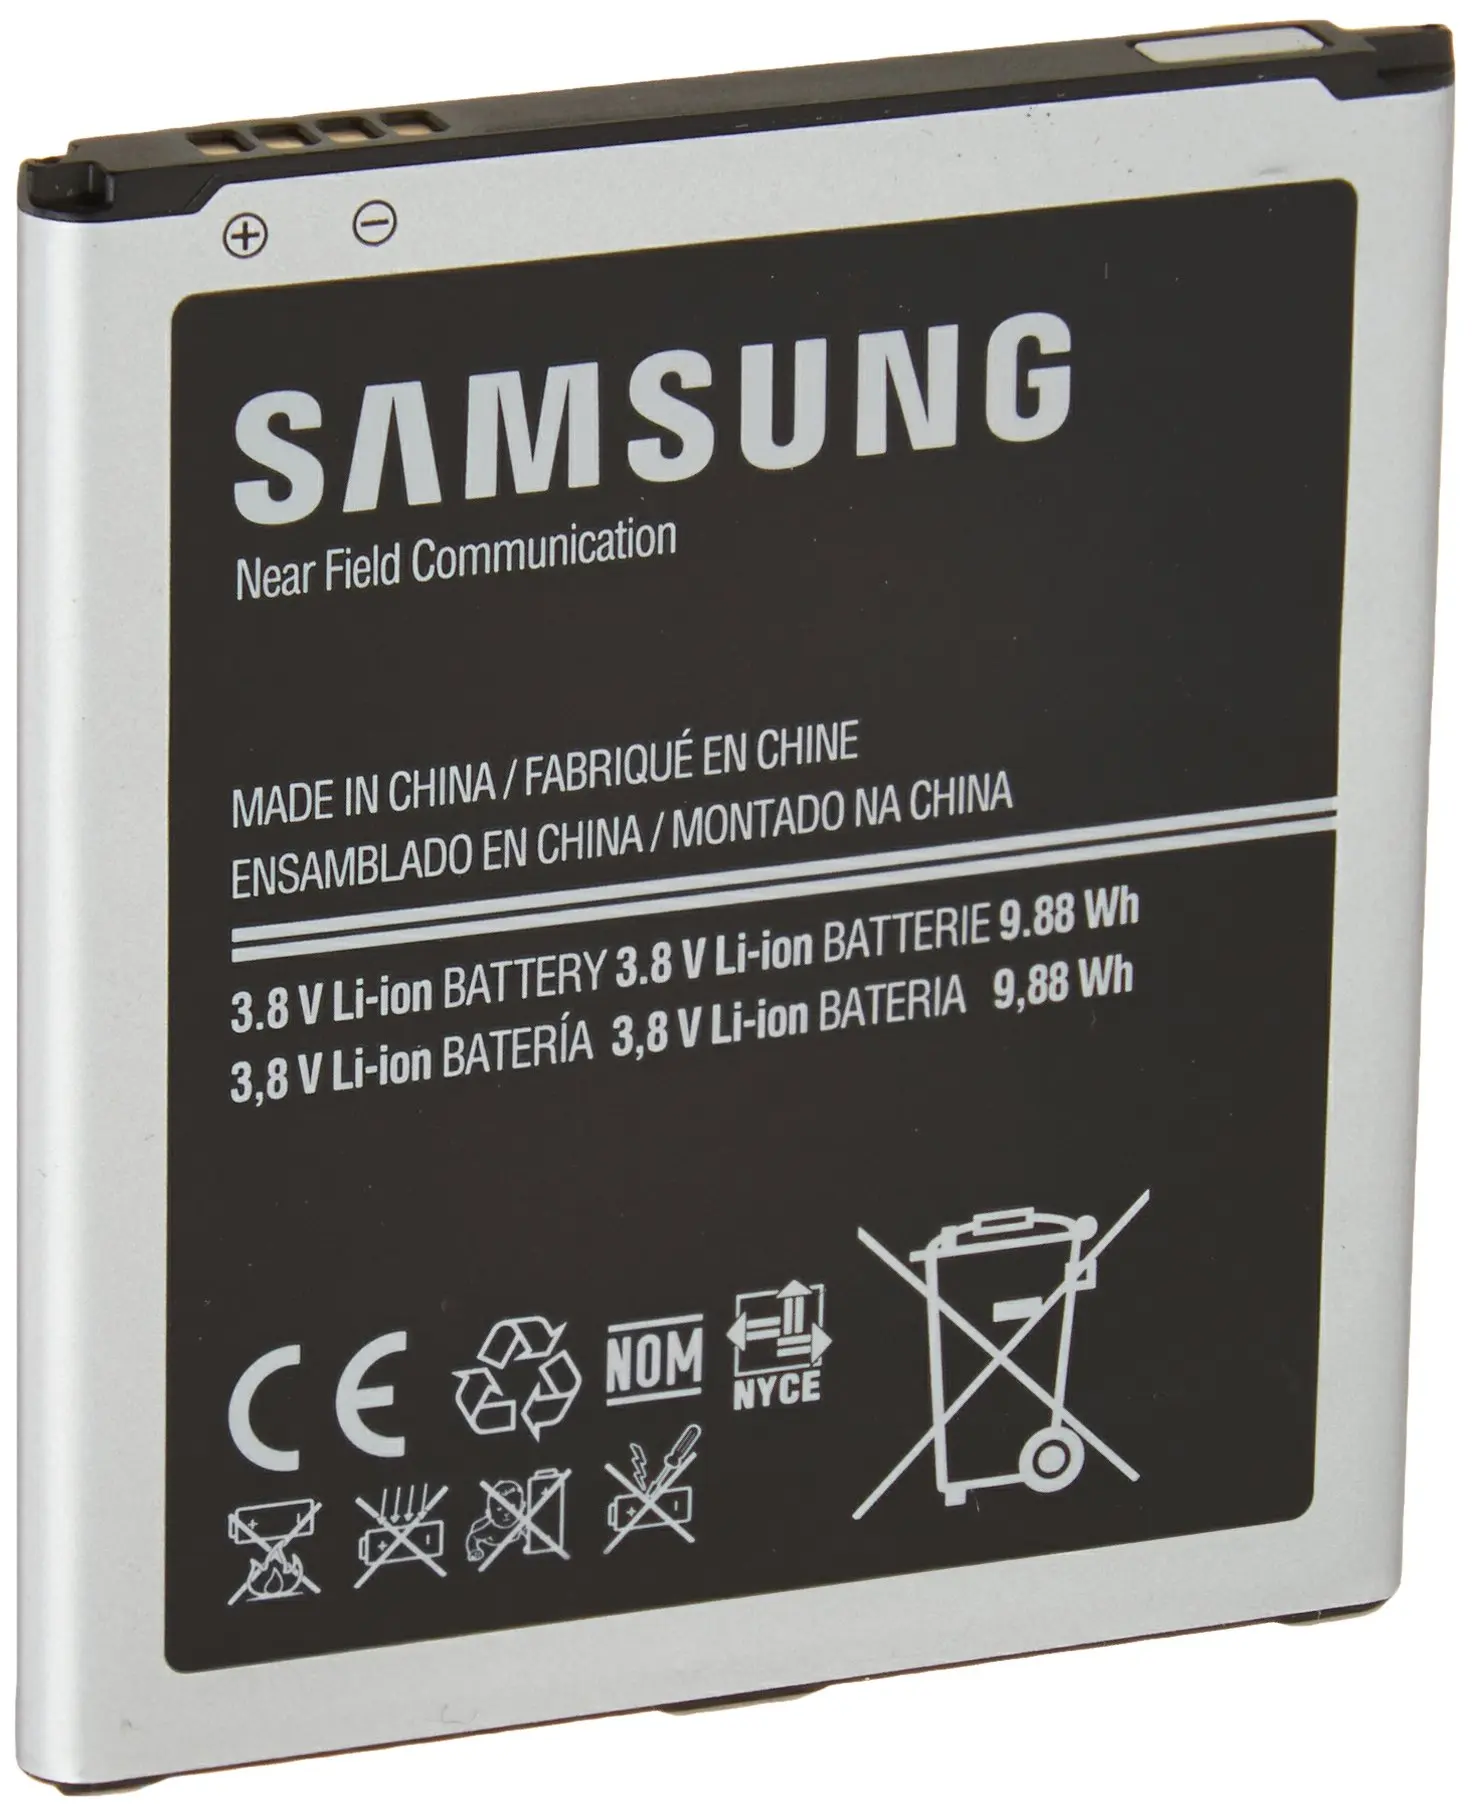 Samsung s10 plus аккумулятор. Samsung Galaxy s4 OEM Battery. Samsung b600. Оригинальный аккумулятор Samsung s10. Galaxy s4 Battery model.